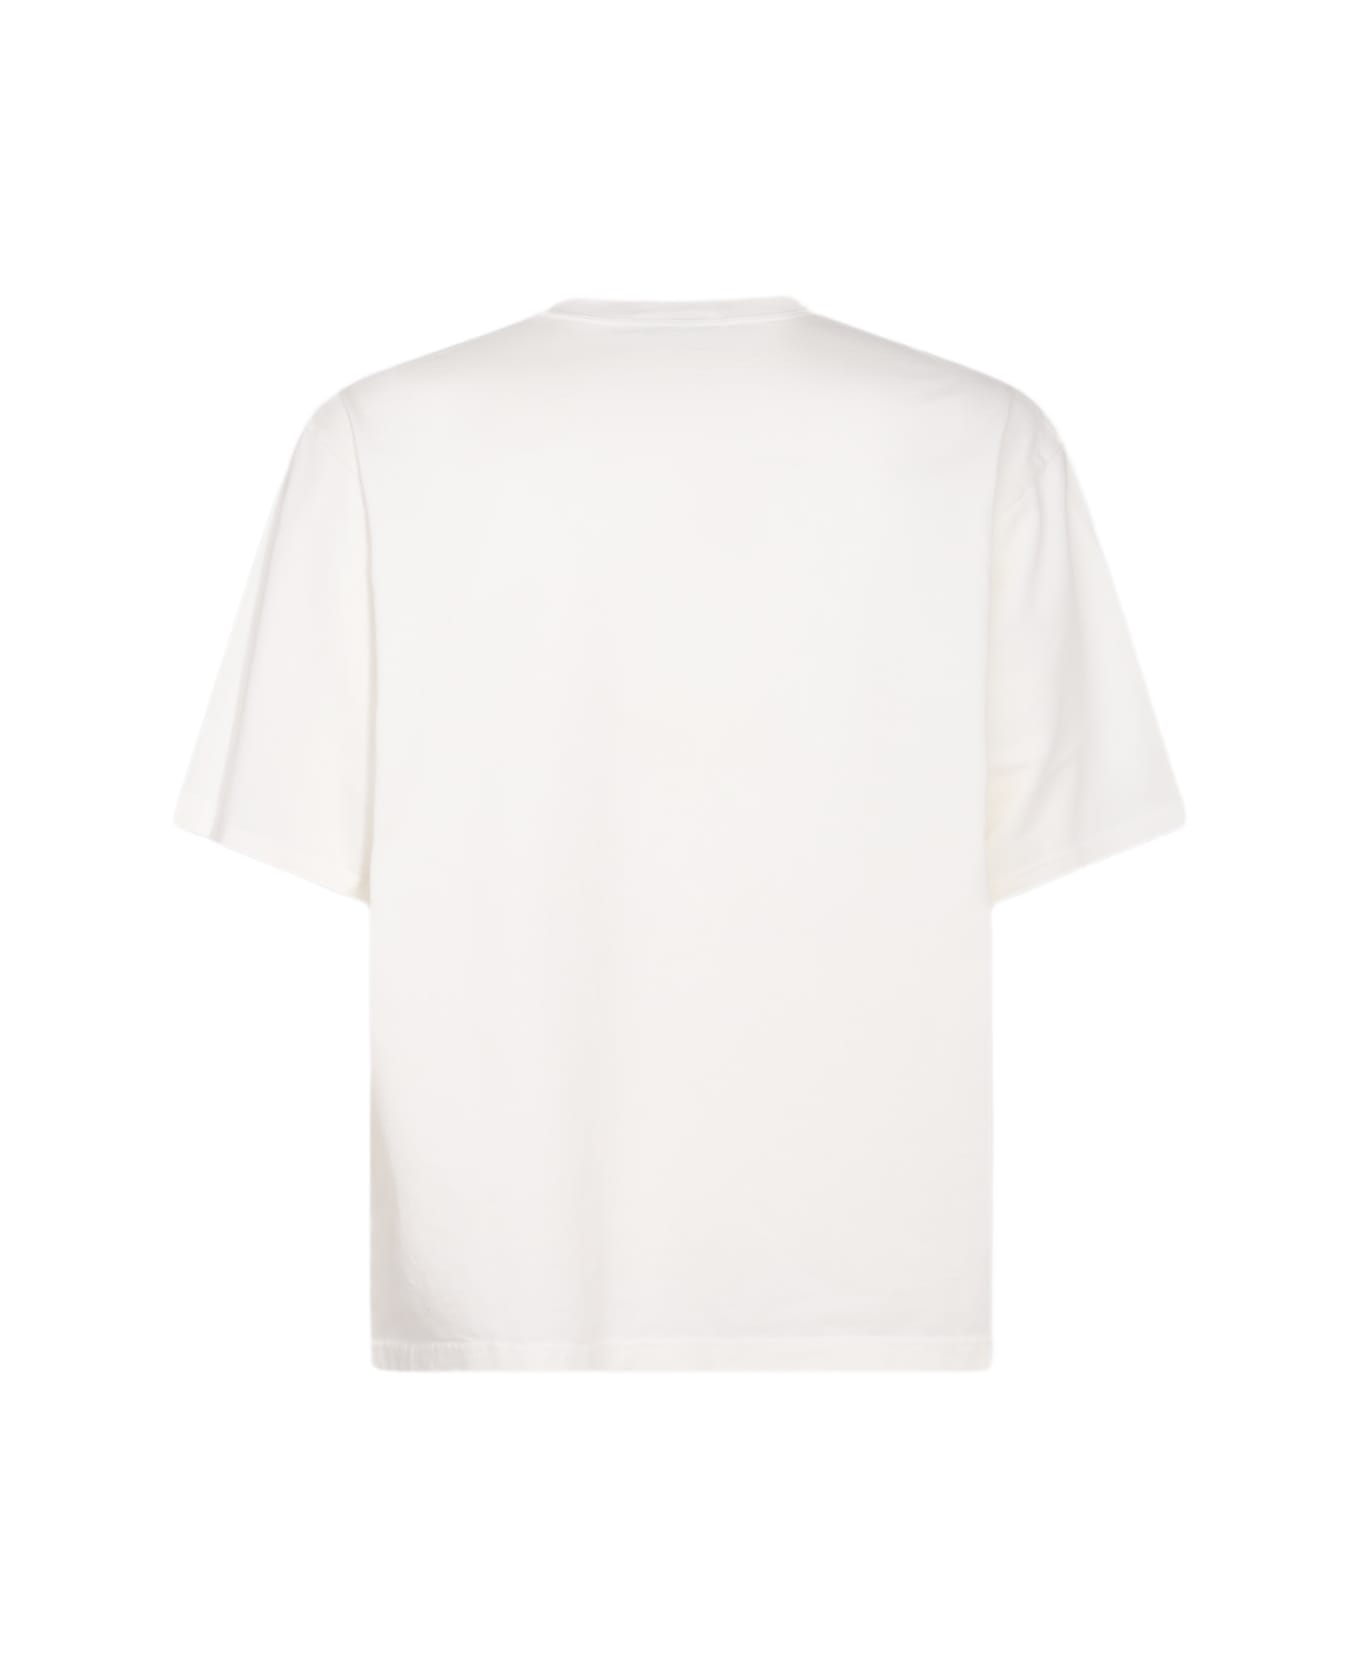 Undercover Jun Takahashi White And Black Cotton T-shirt